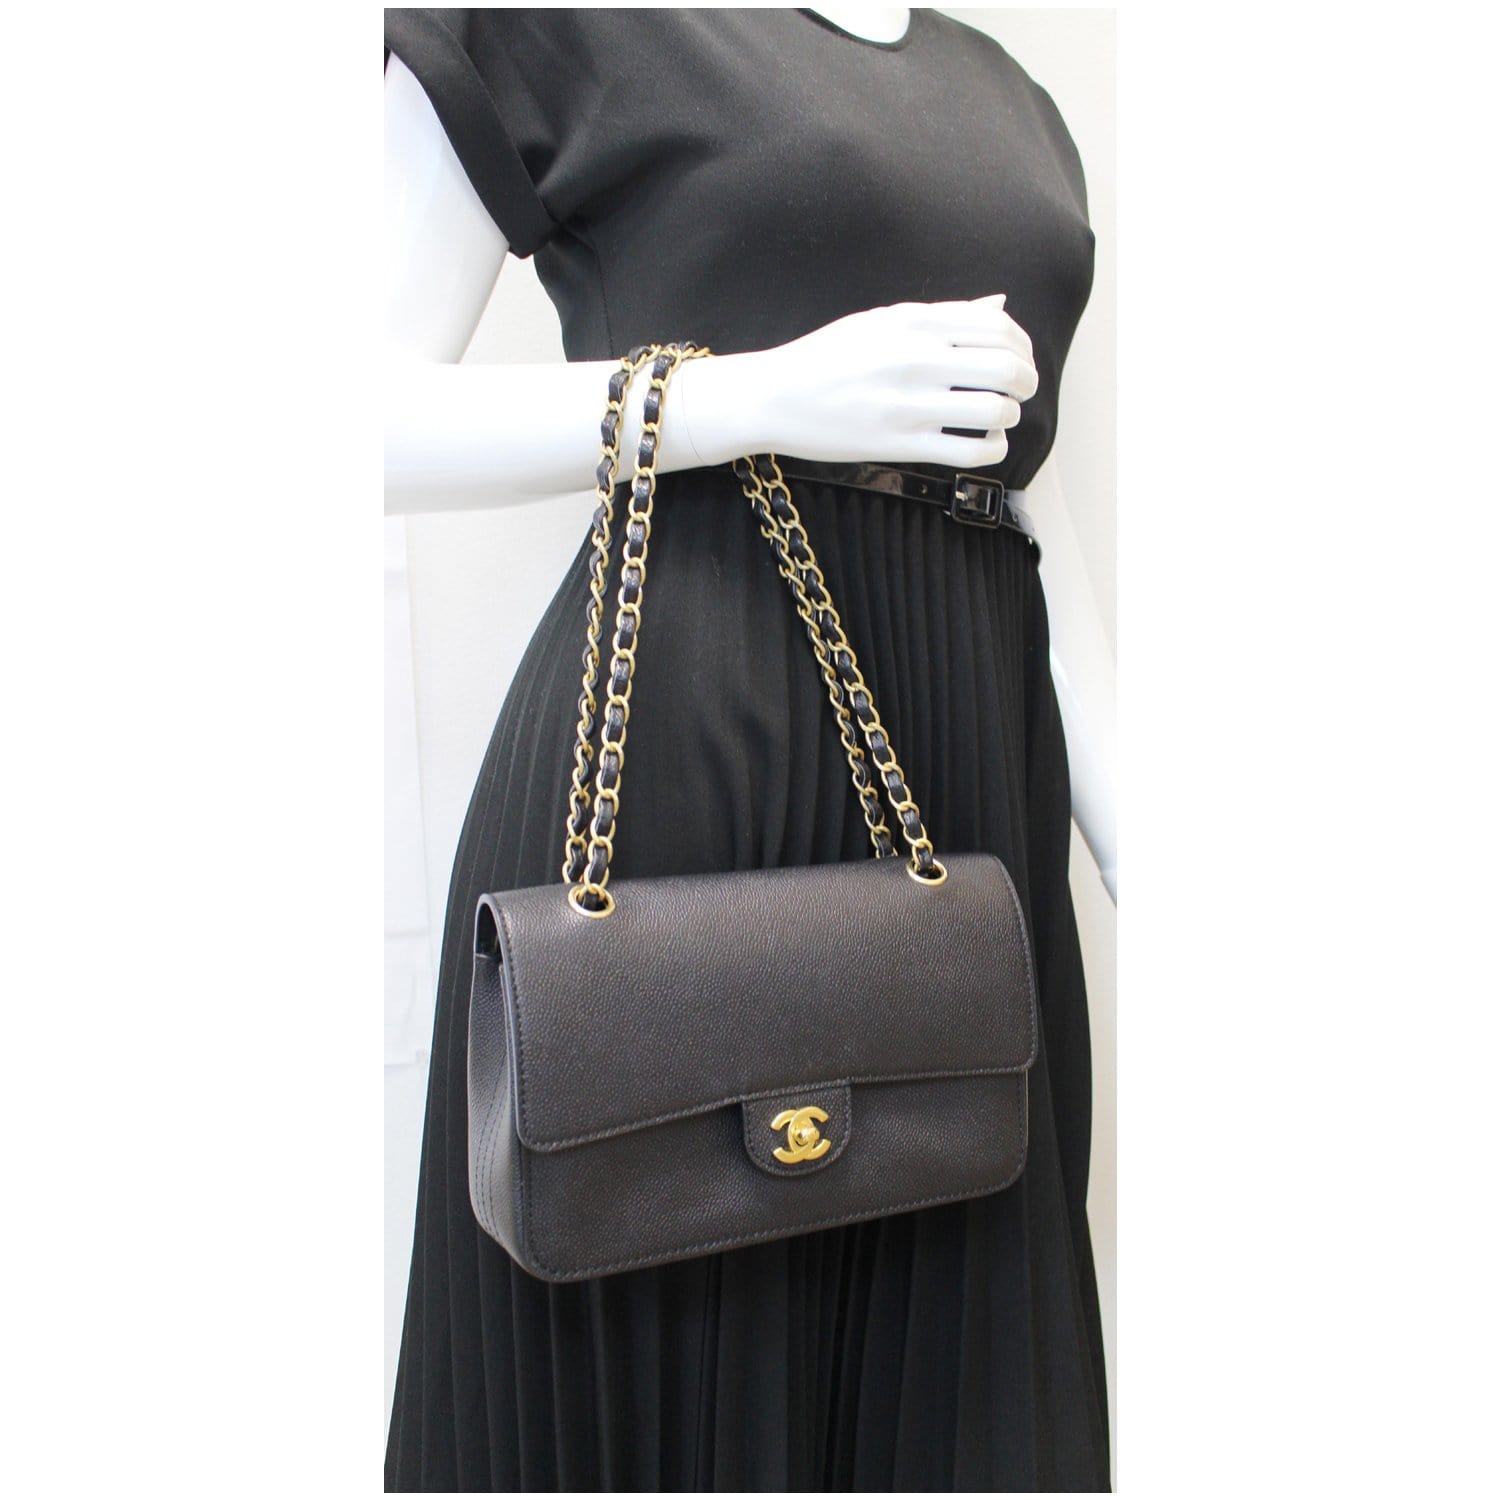 CHANEL, Bags, Chanel Black Caviar Leather Medium Classic Flap Bag